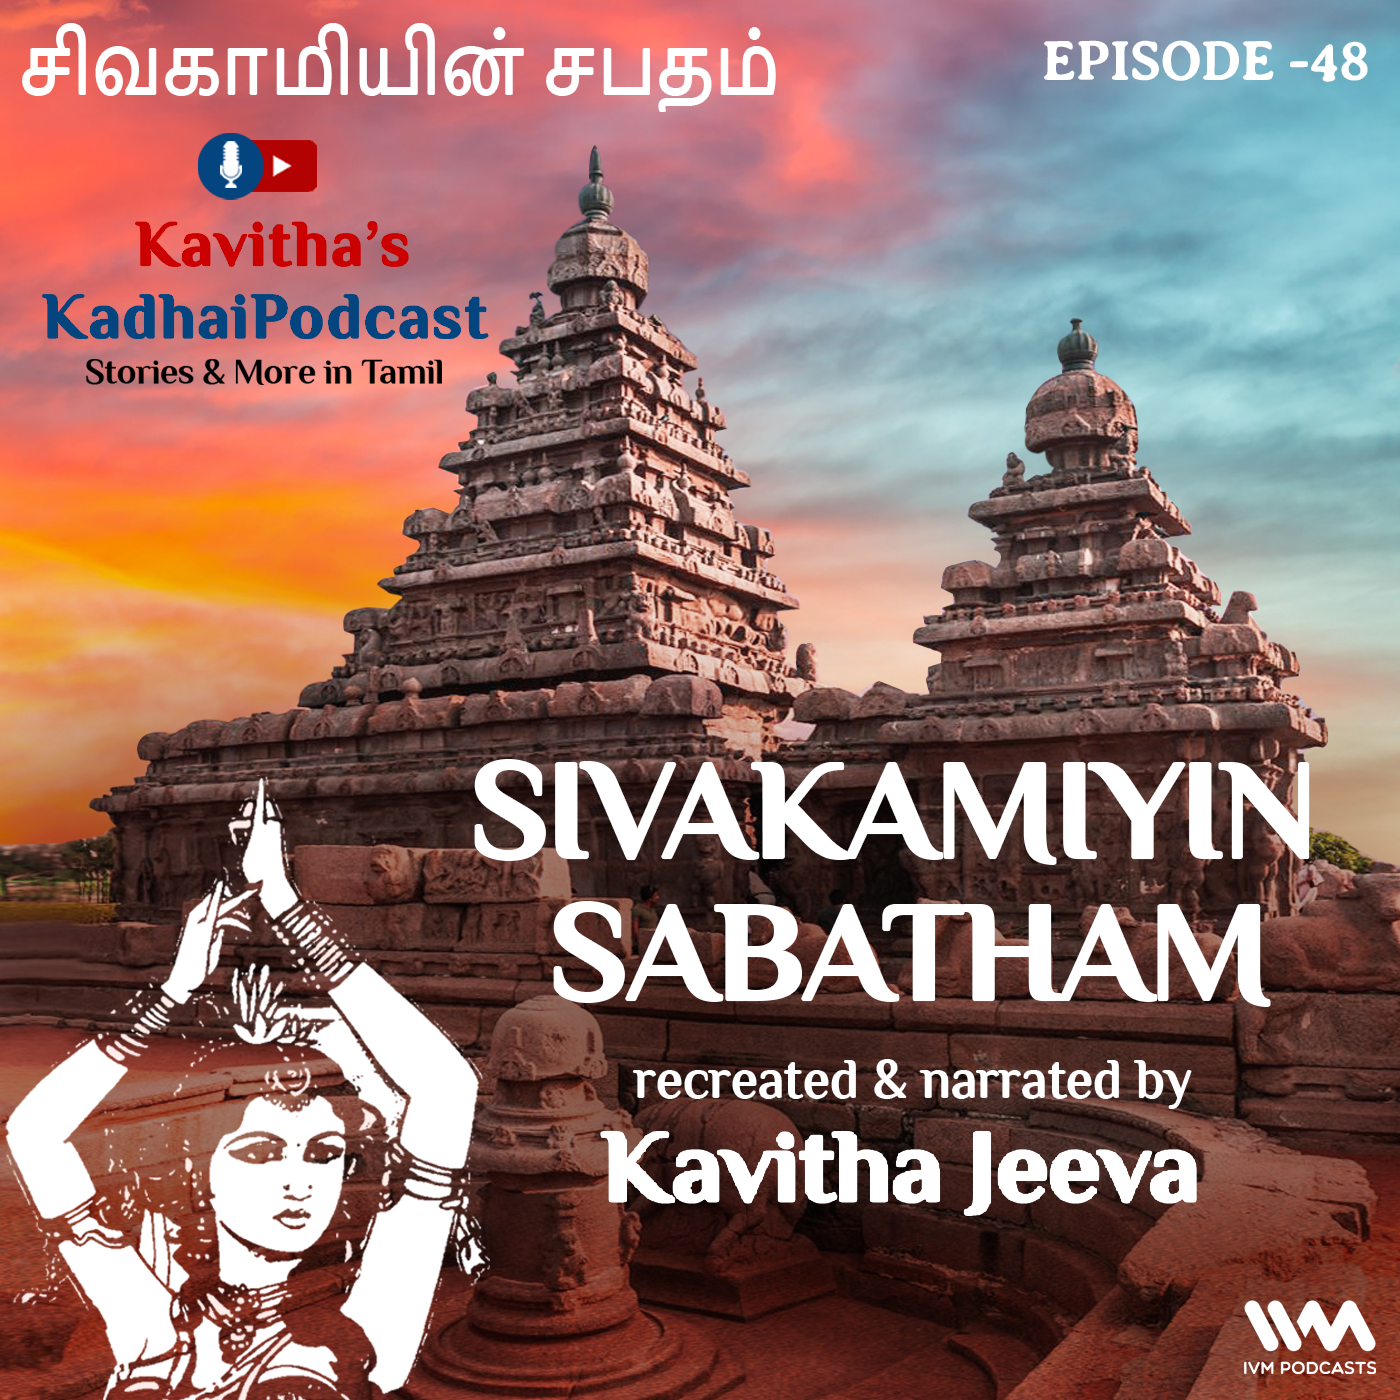 KadhaiPodcast's Sivakamiyin Sabatham - Episode # 48